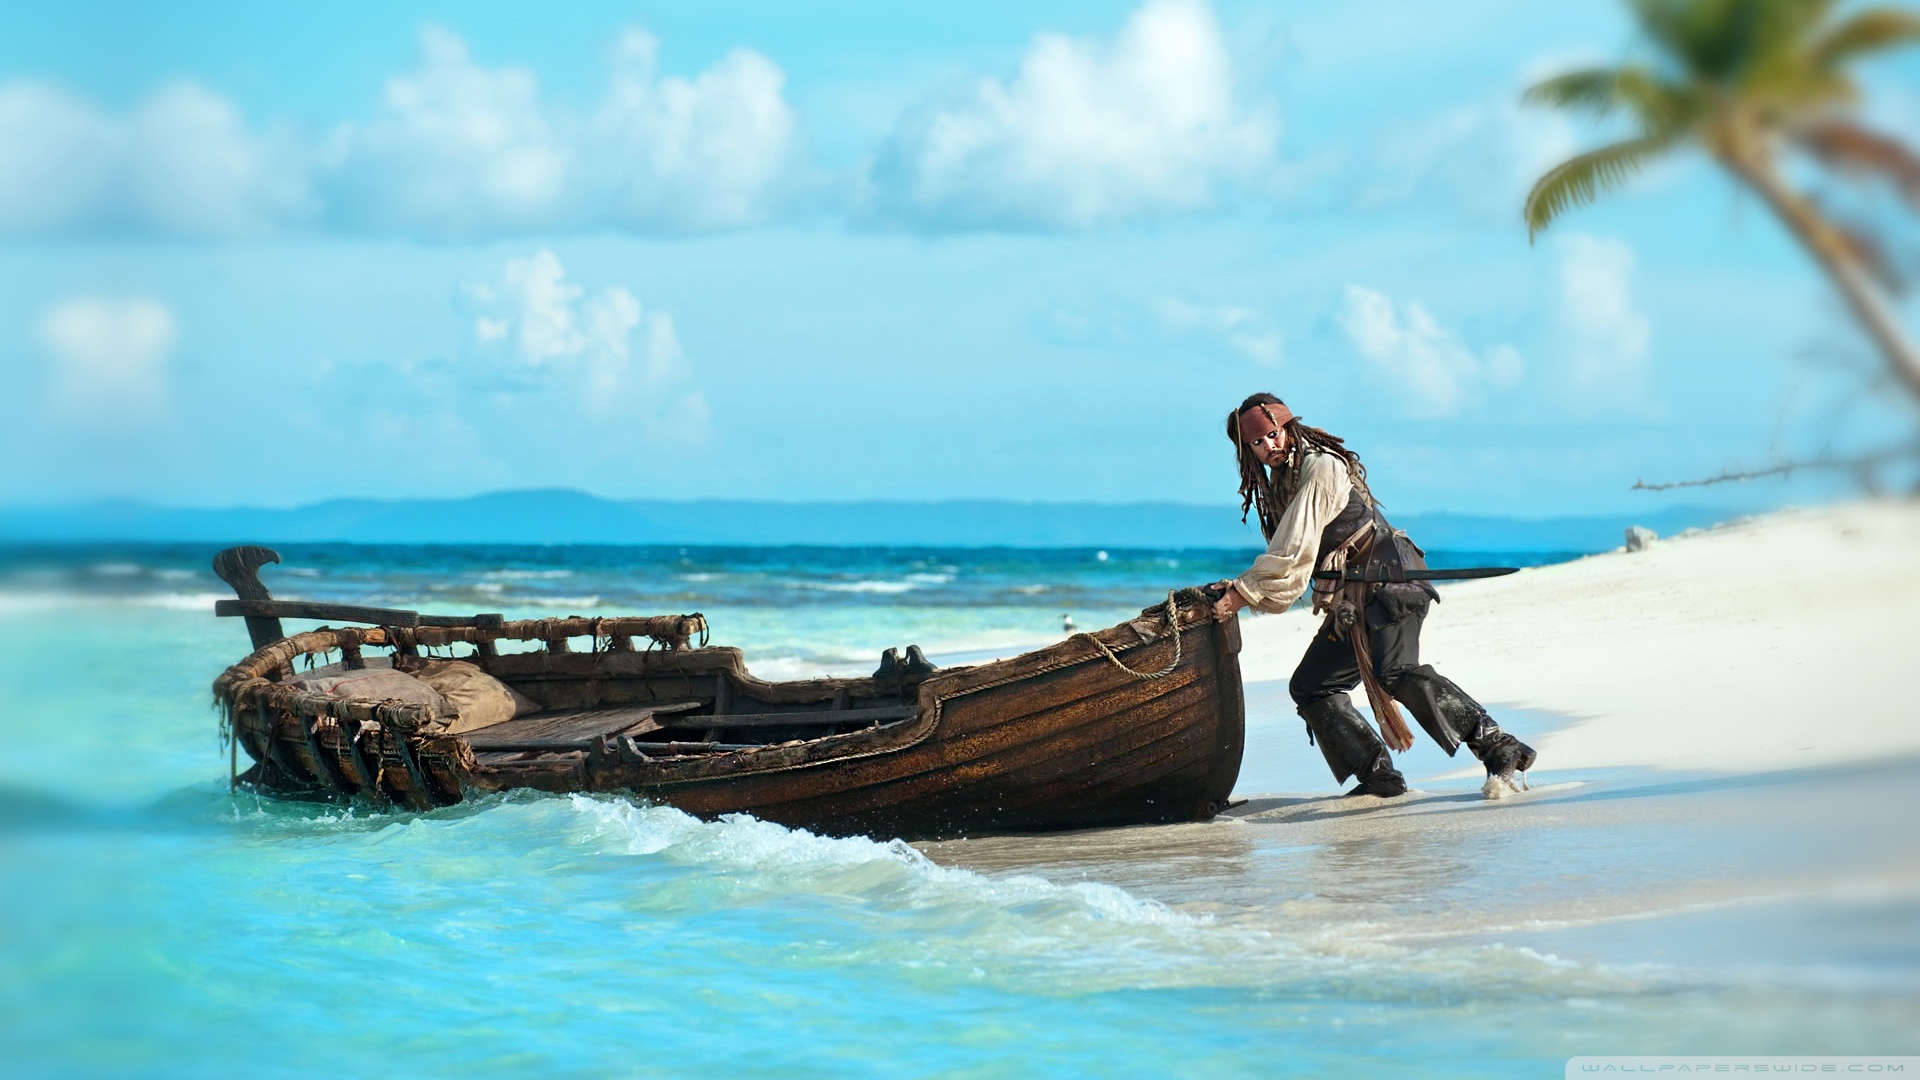 Pirates Of The Caribbean On Stranger Tides Ultra HD Desktop Background Wallpaper for 4K UHD TV, Widescreen & UltraWide Desktop & Laptop, Tablet